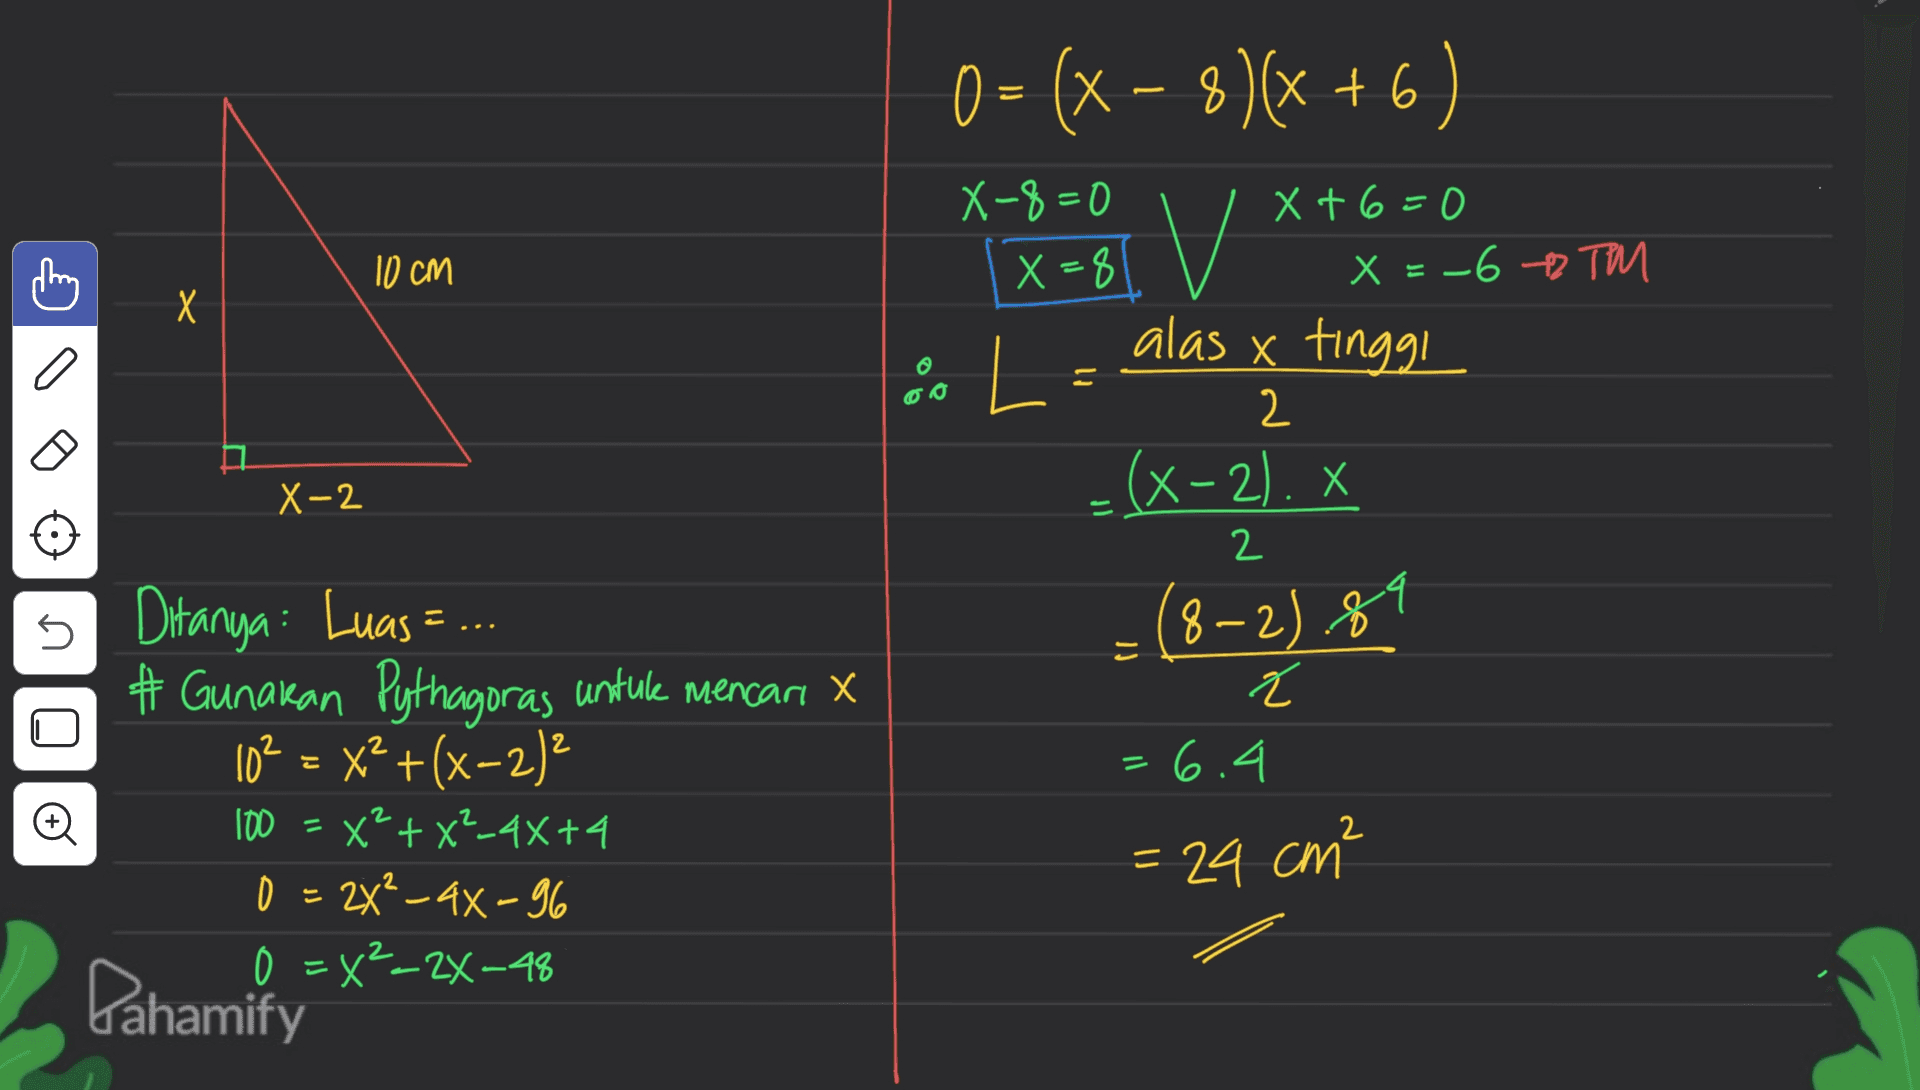 X-8=0 X=8 10 cm X 0 = (x – 3)(x +6) X= v 8 & L - alas x tinggi =(x-2).* (x-2). * (8-2).89 x+6=0 x = -6 + Toll x 2 X-2 2 U = ? E ł Ditanya Luas = .. # Gunakan Pythagoras untuk mencan X 102 = x²+(x-2)2 x + x²-4x+4 24²_44-96 0 0=X²-24-48 = 6.4 o 2 1000 = 24 cm² 0 는 Dahamify 